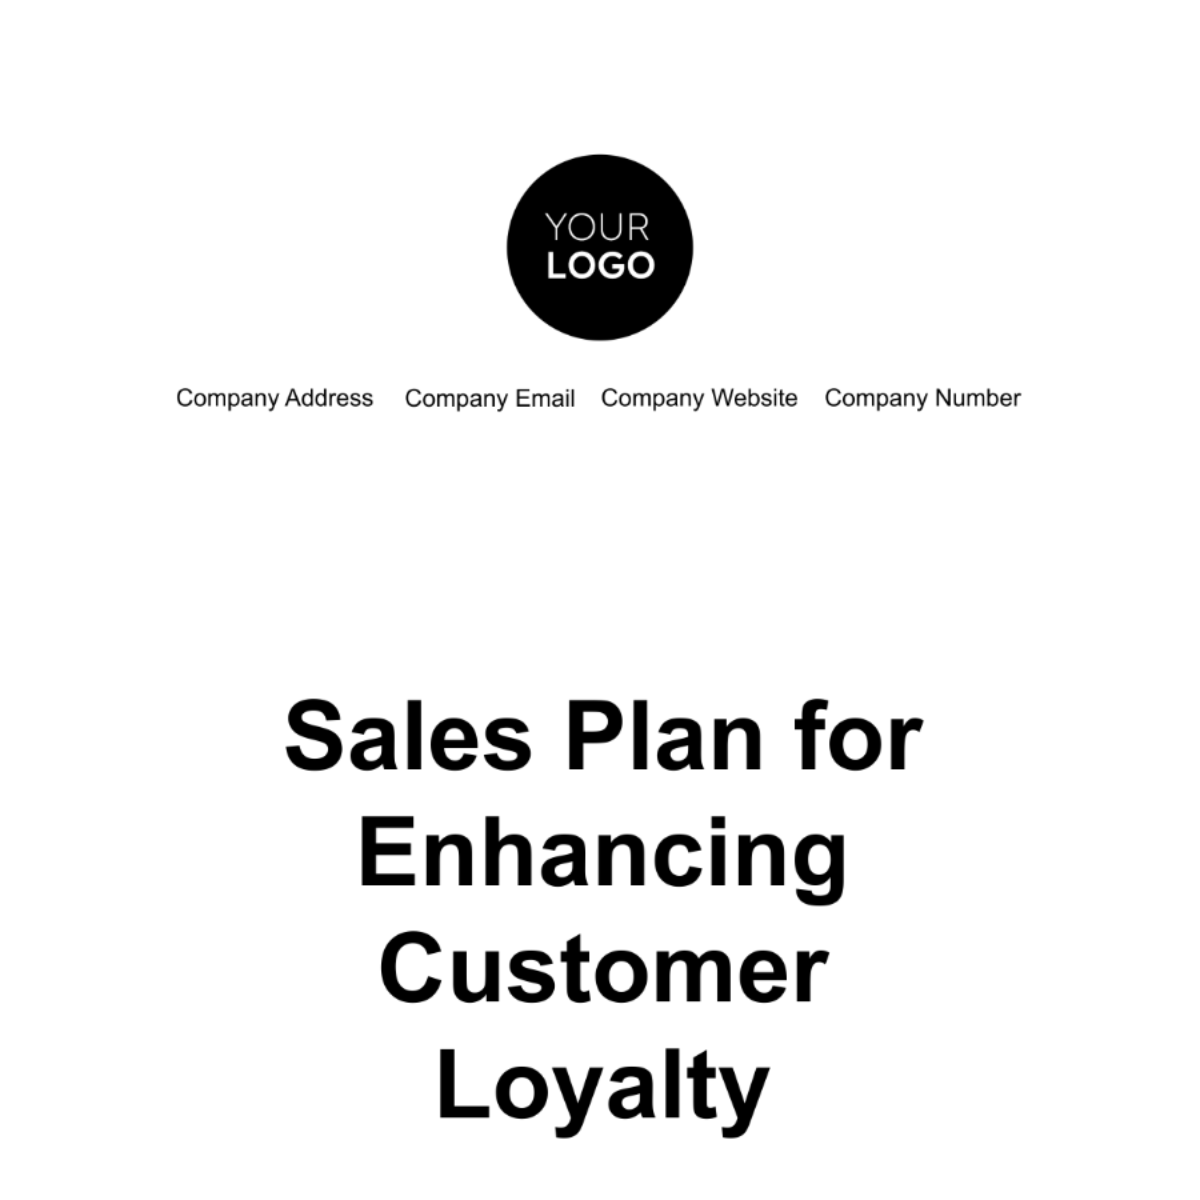 Free Sales Plan for Enhancing Customer Loyalty Template